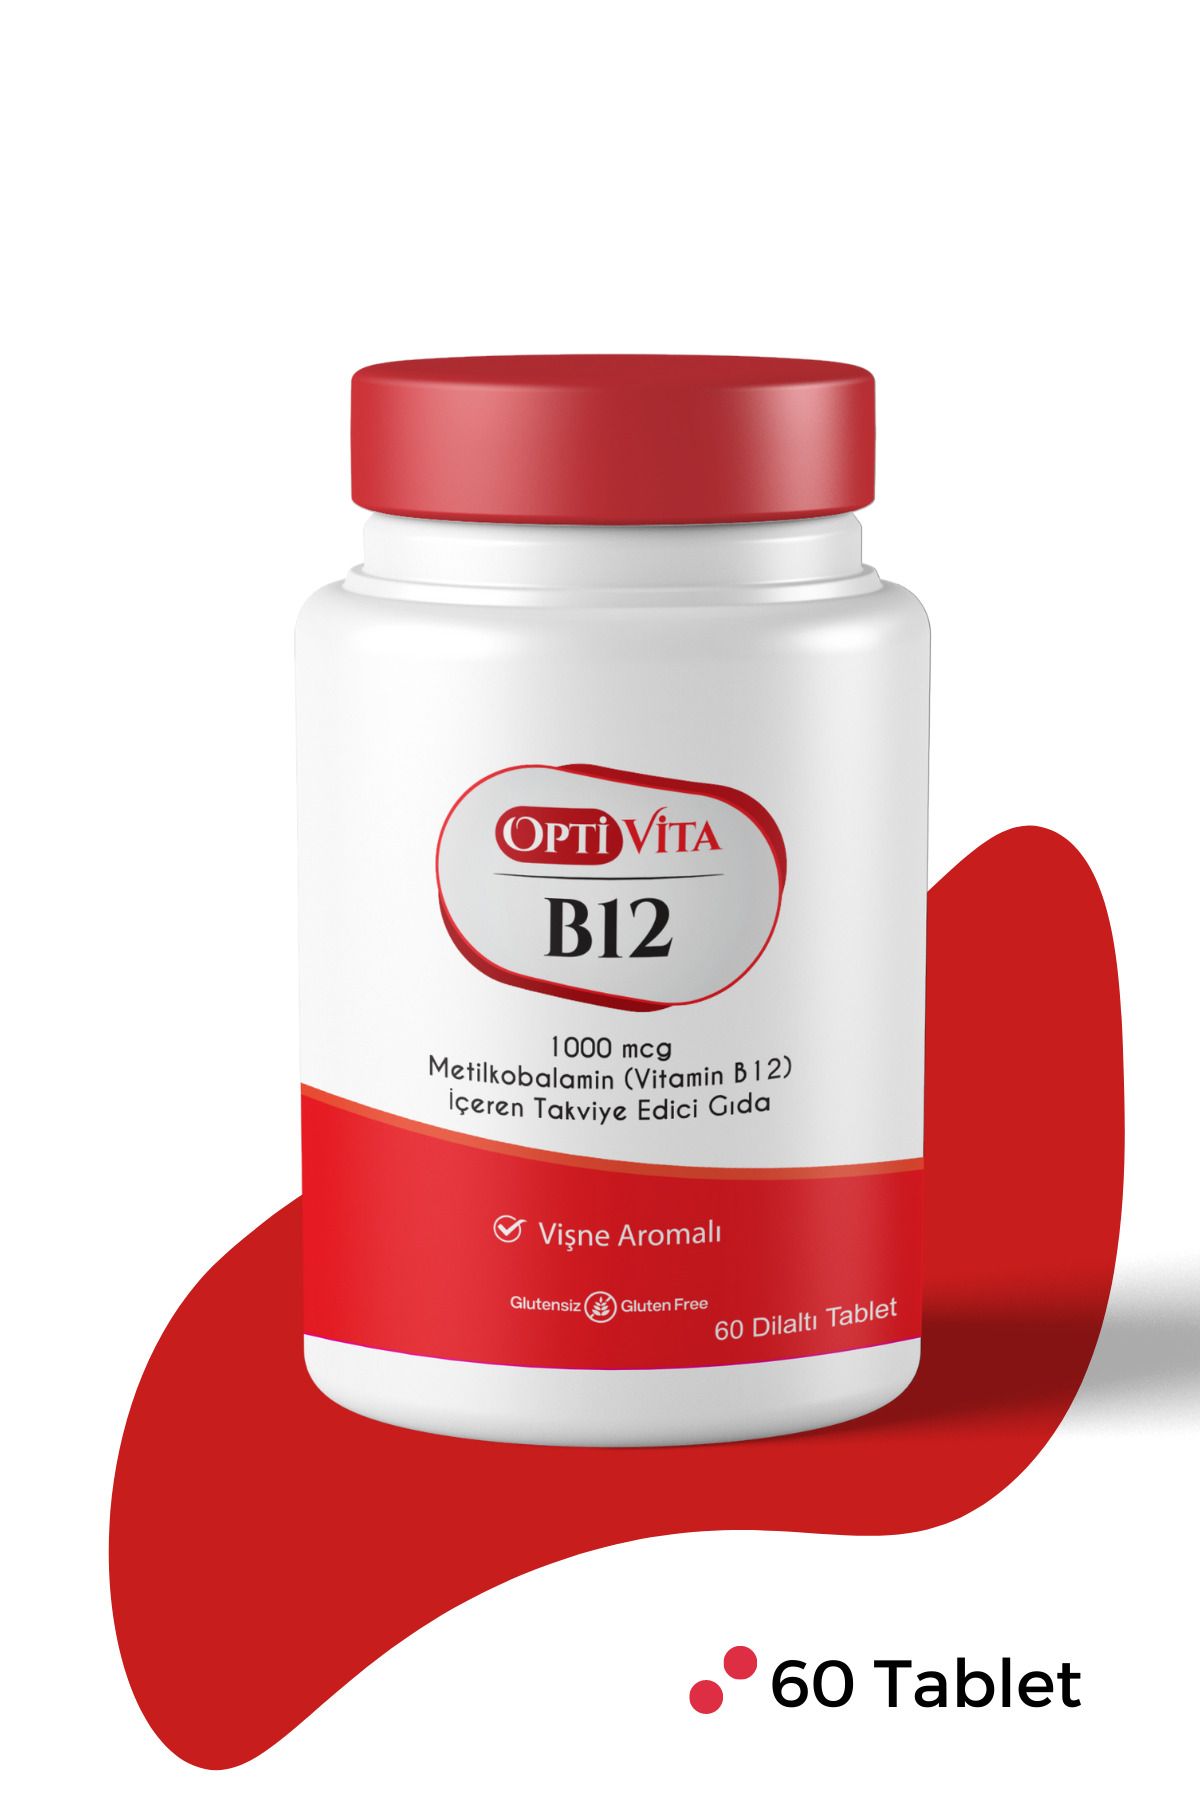 Optivita Vitamin B12 60 Tablet Metilkobalamin 1000 Mcg Dilaltı Tablet (METHYLCOBALAMİN)